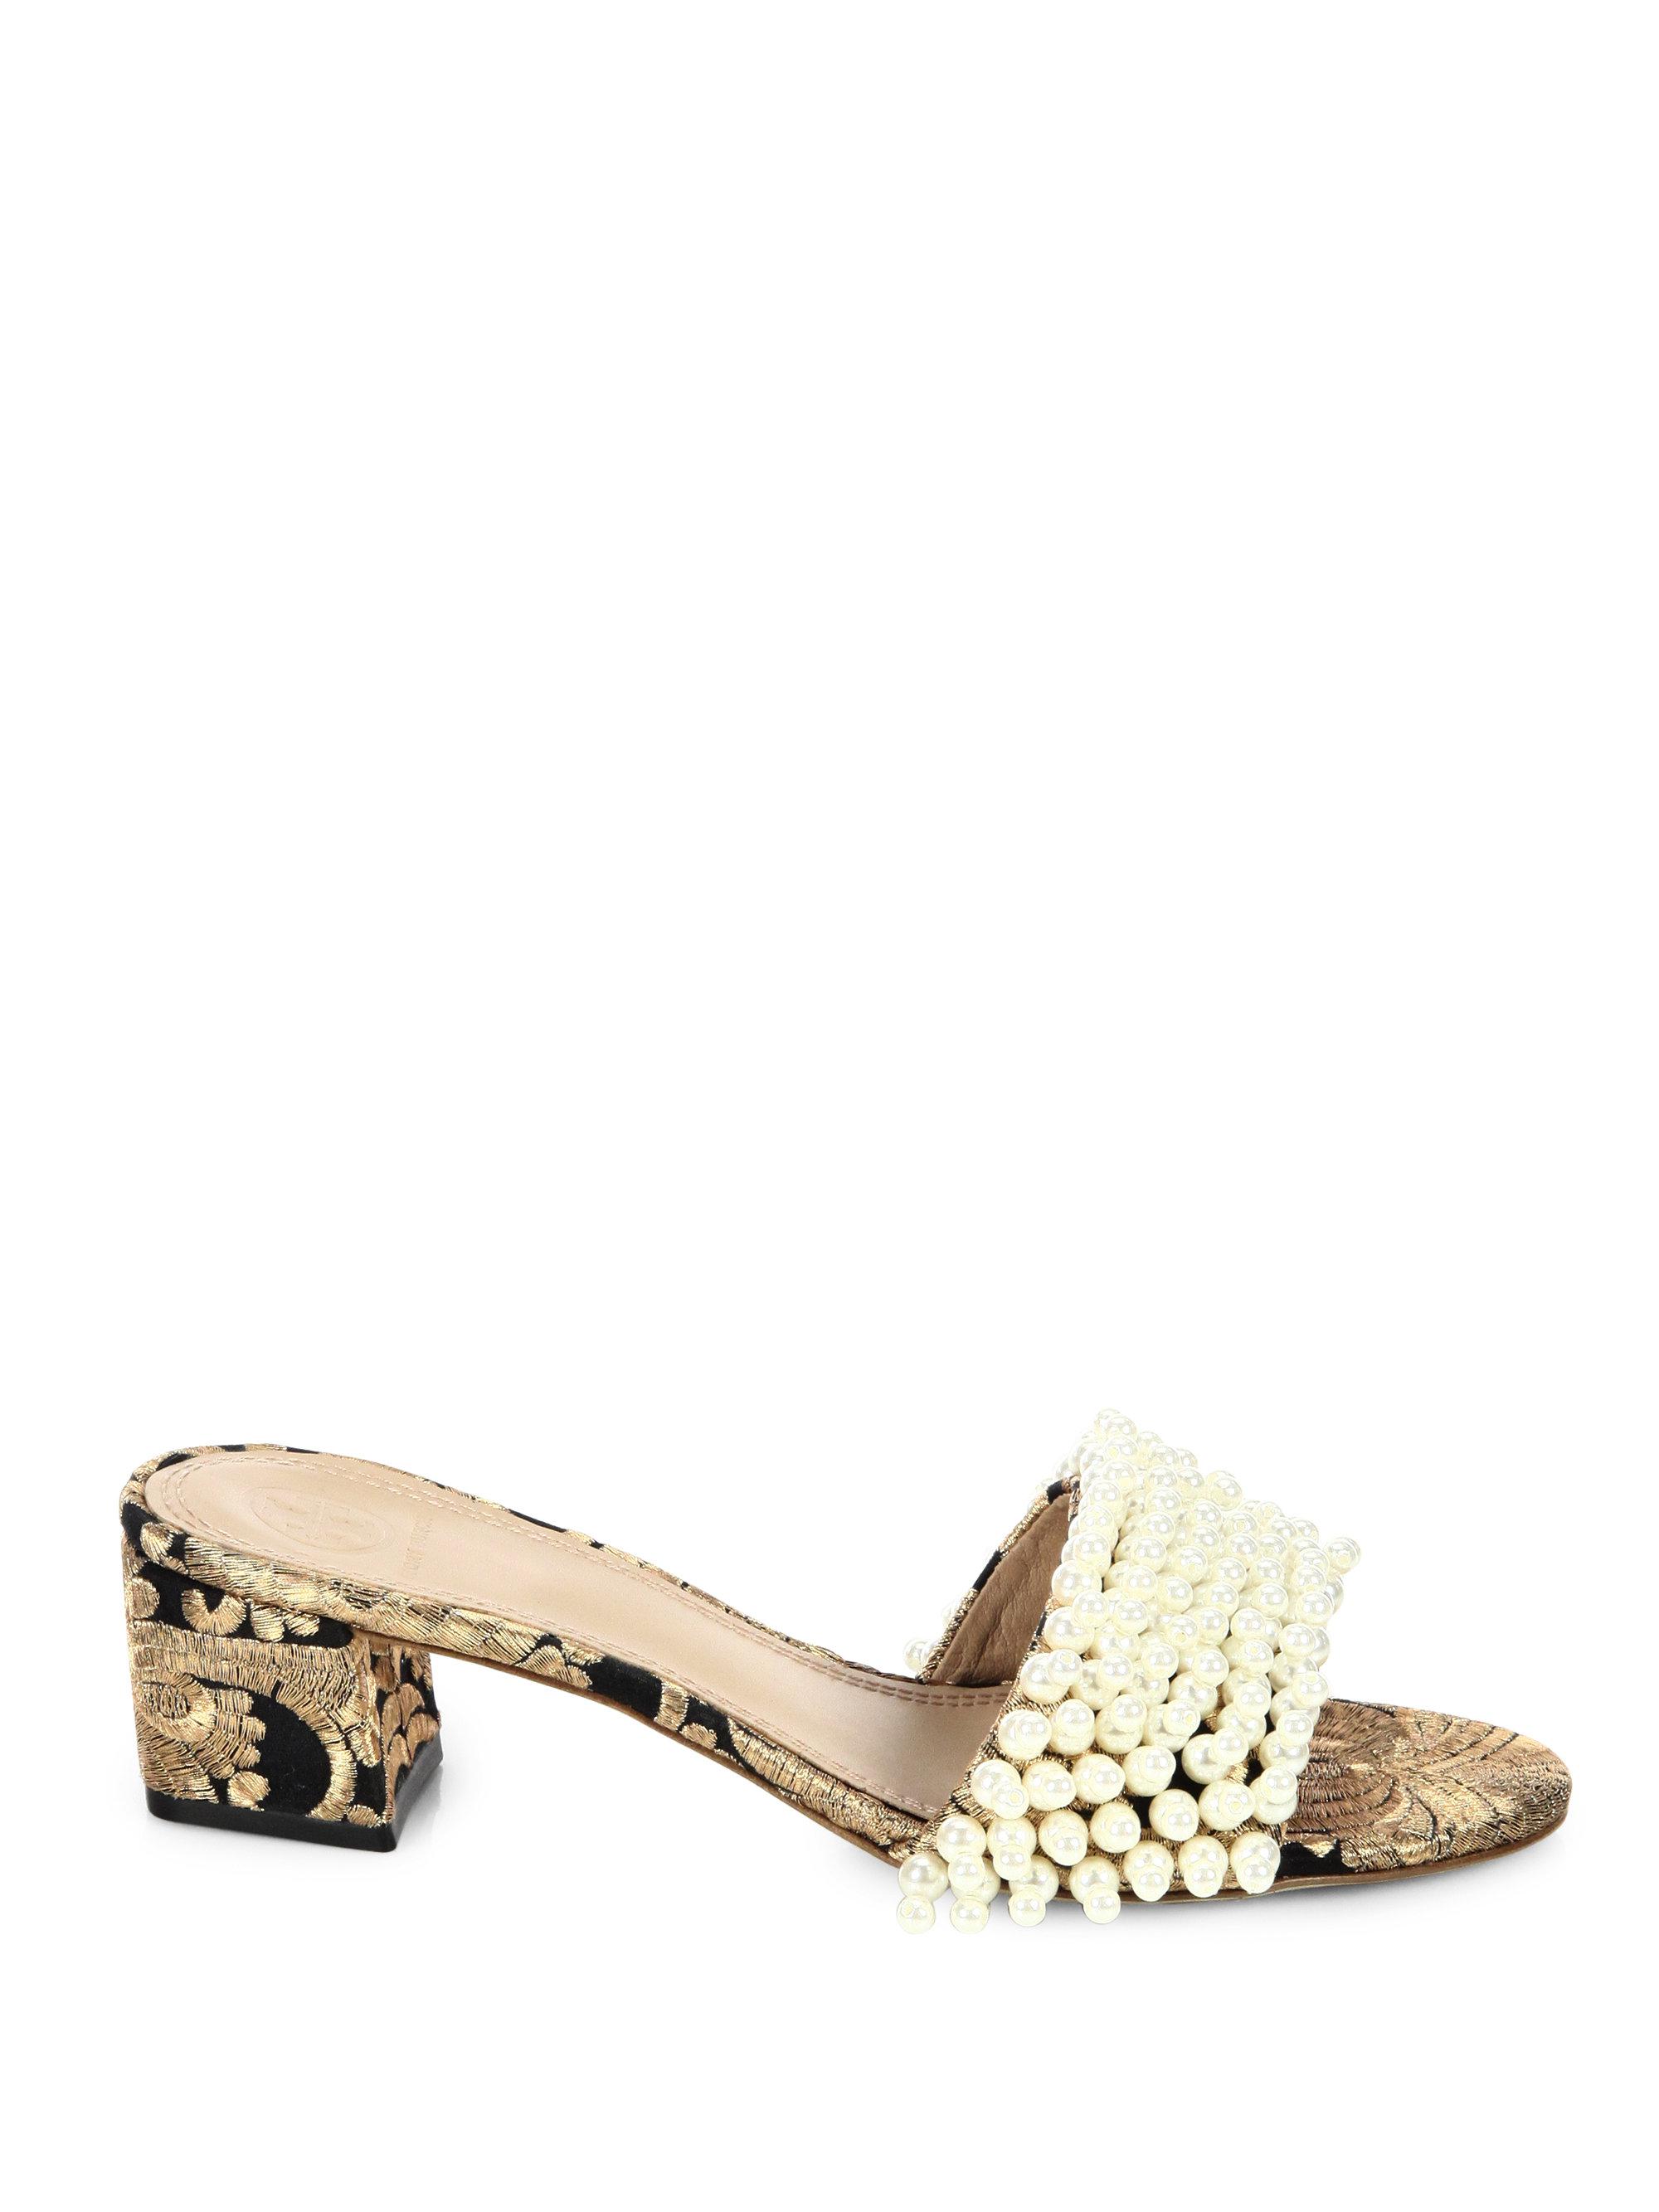 Lyst - Tory Burch Tatiana Embellished Brocade Slide Sandals in Metallic